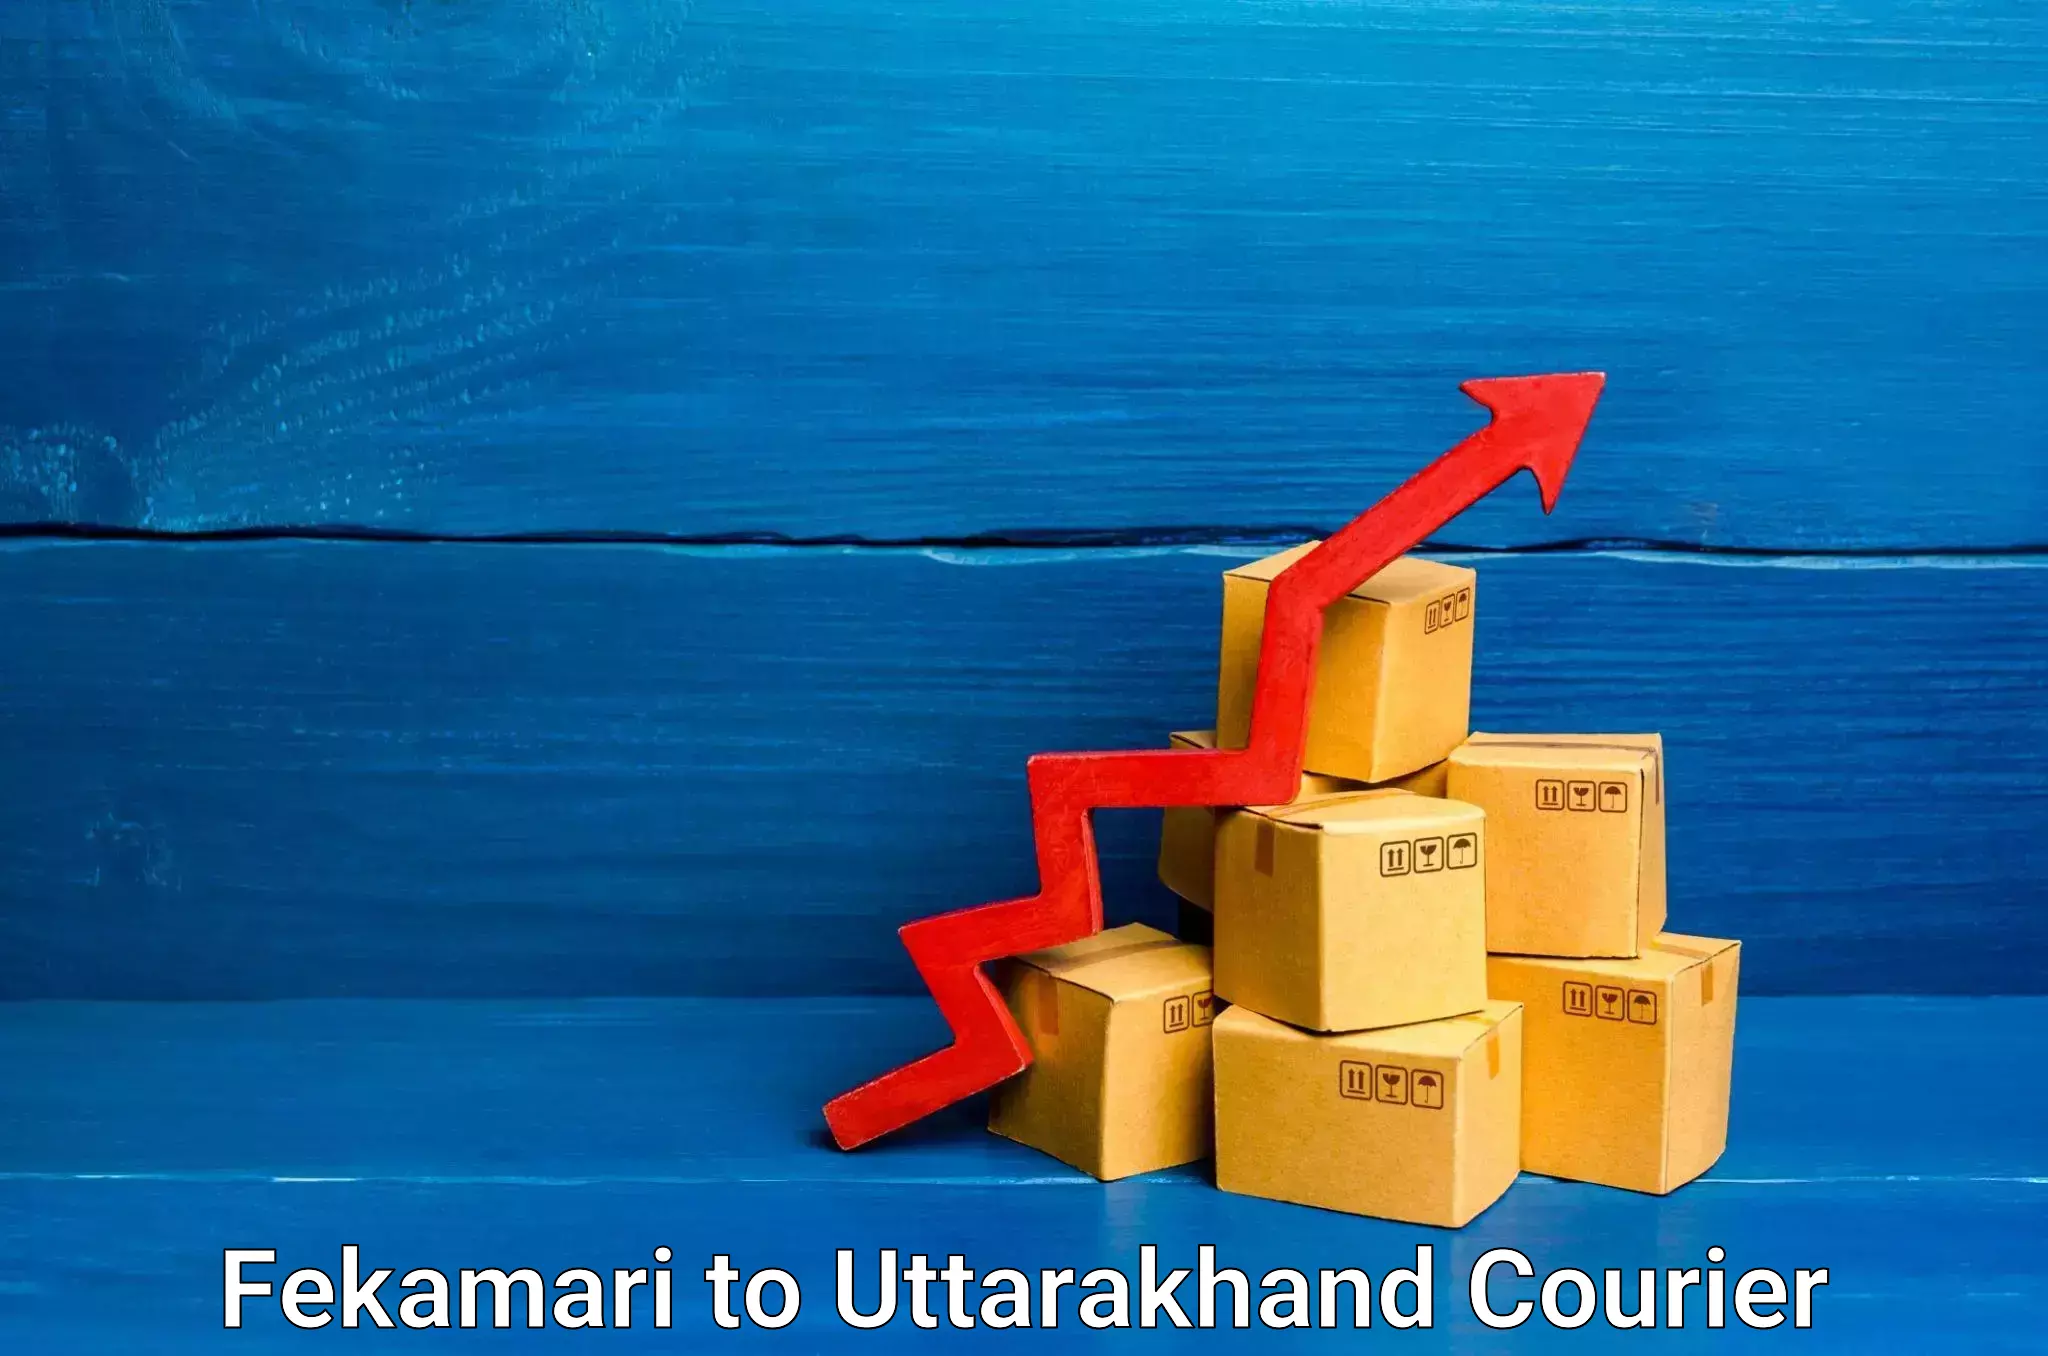 Courier service comparison Fekamari to IIT Roorkee